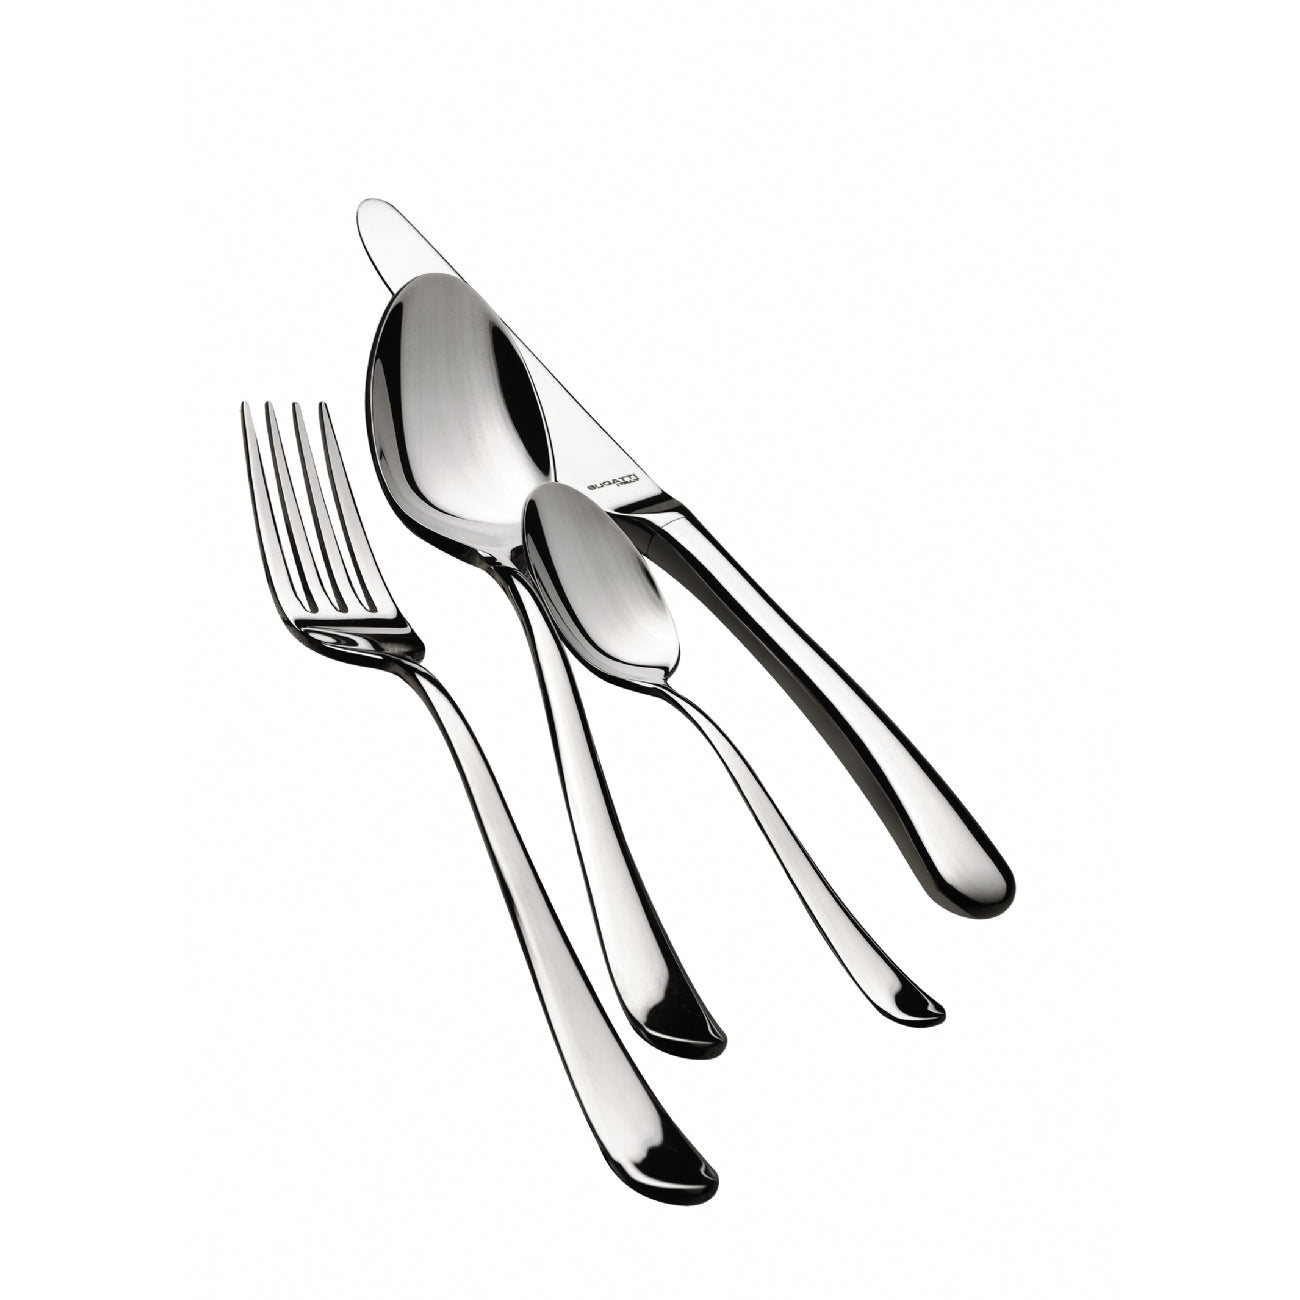 BUGATTI, Settimocielo, 75-piece cutlery set in 18/10 stainless steel